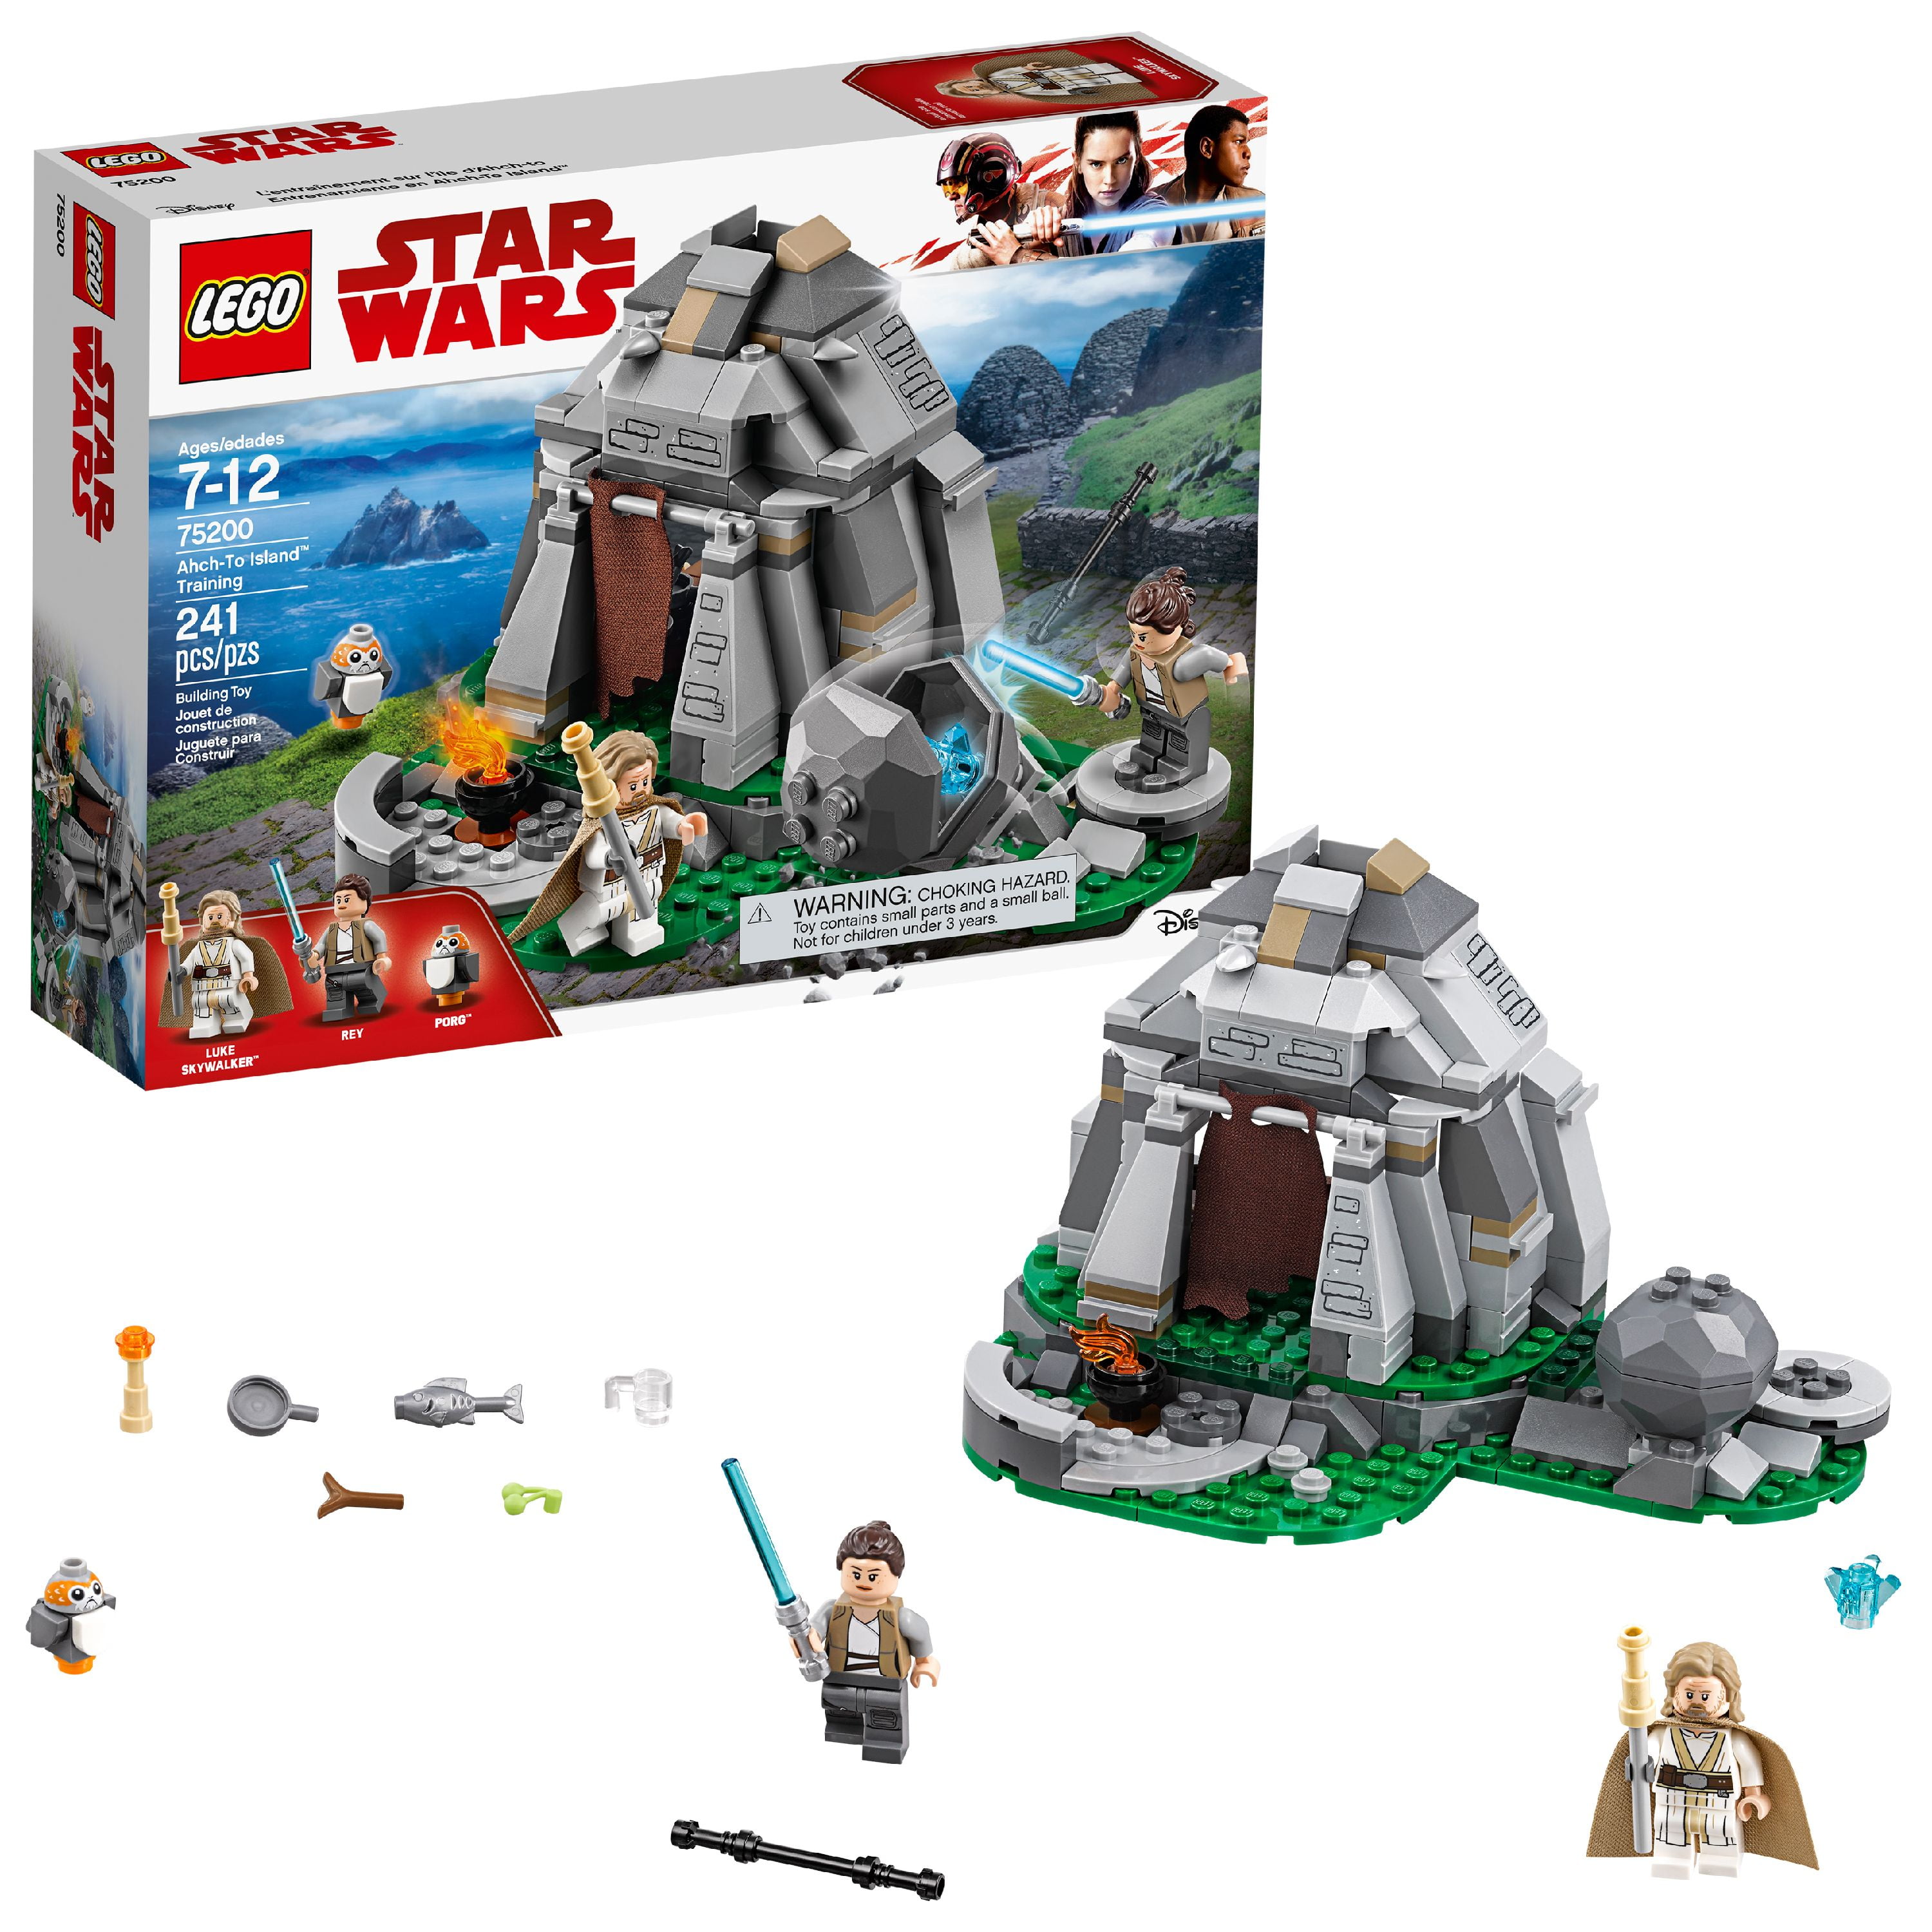 LEGO Star Wars Island Training 75200 Luke Skywalker Building Set - Walmart.com